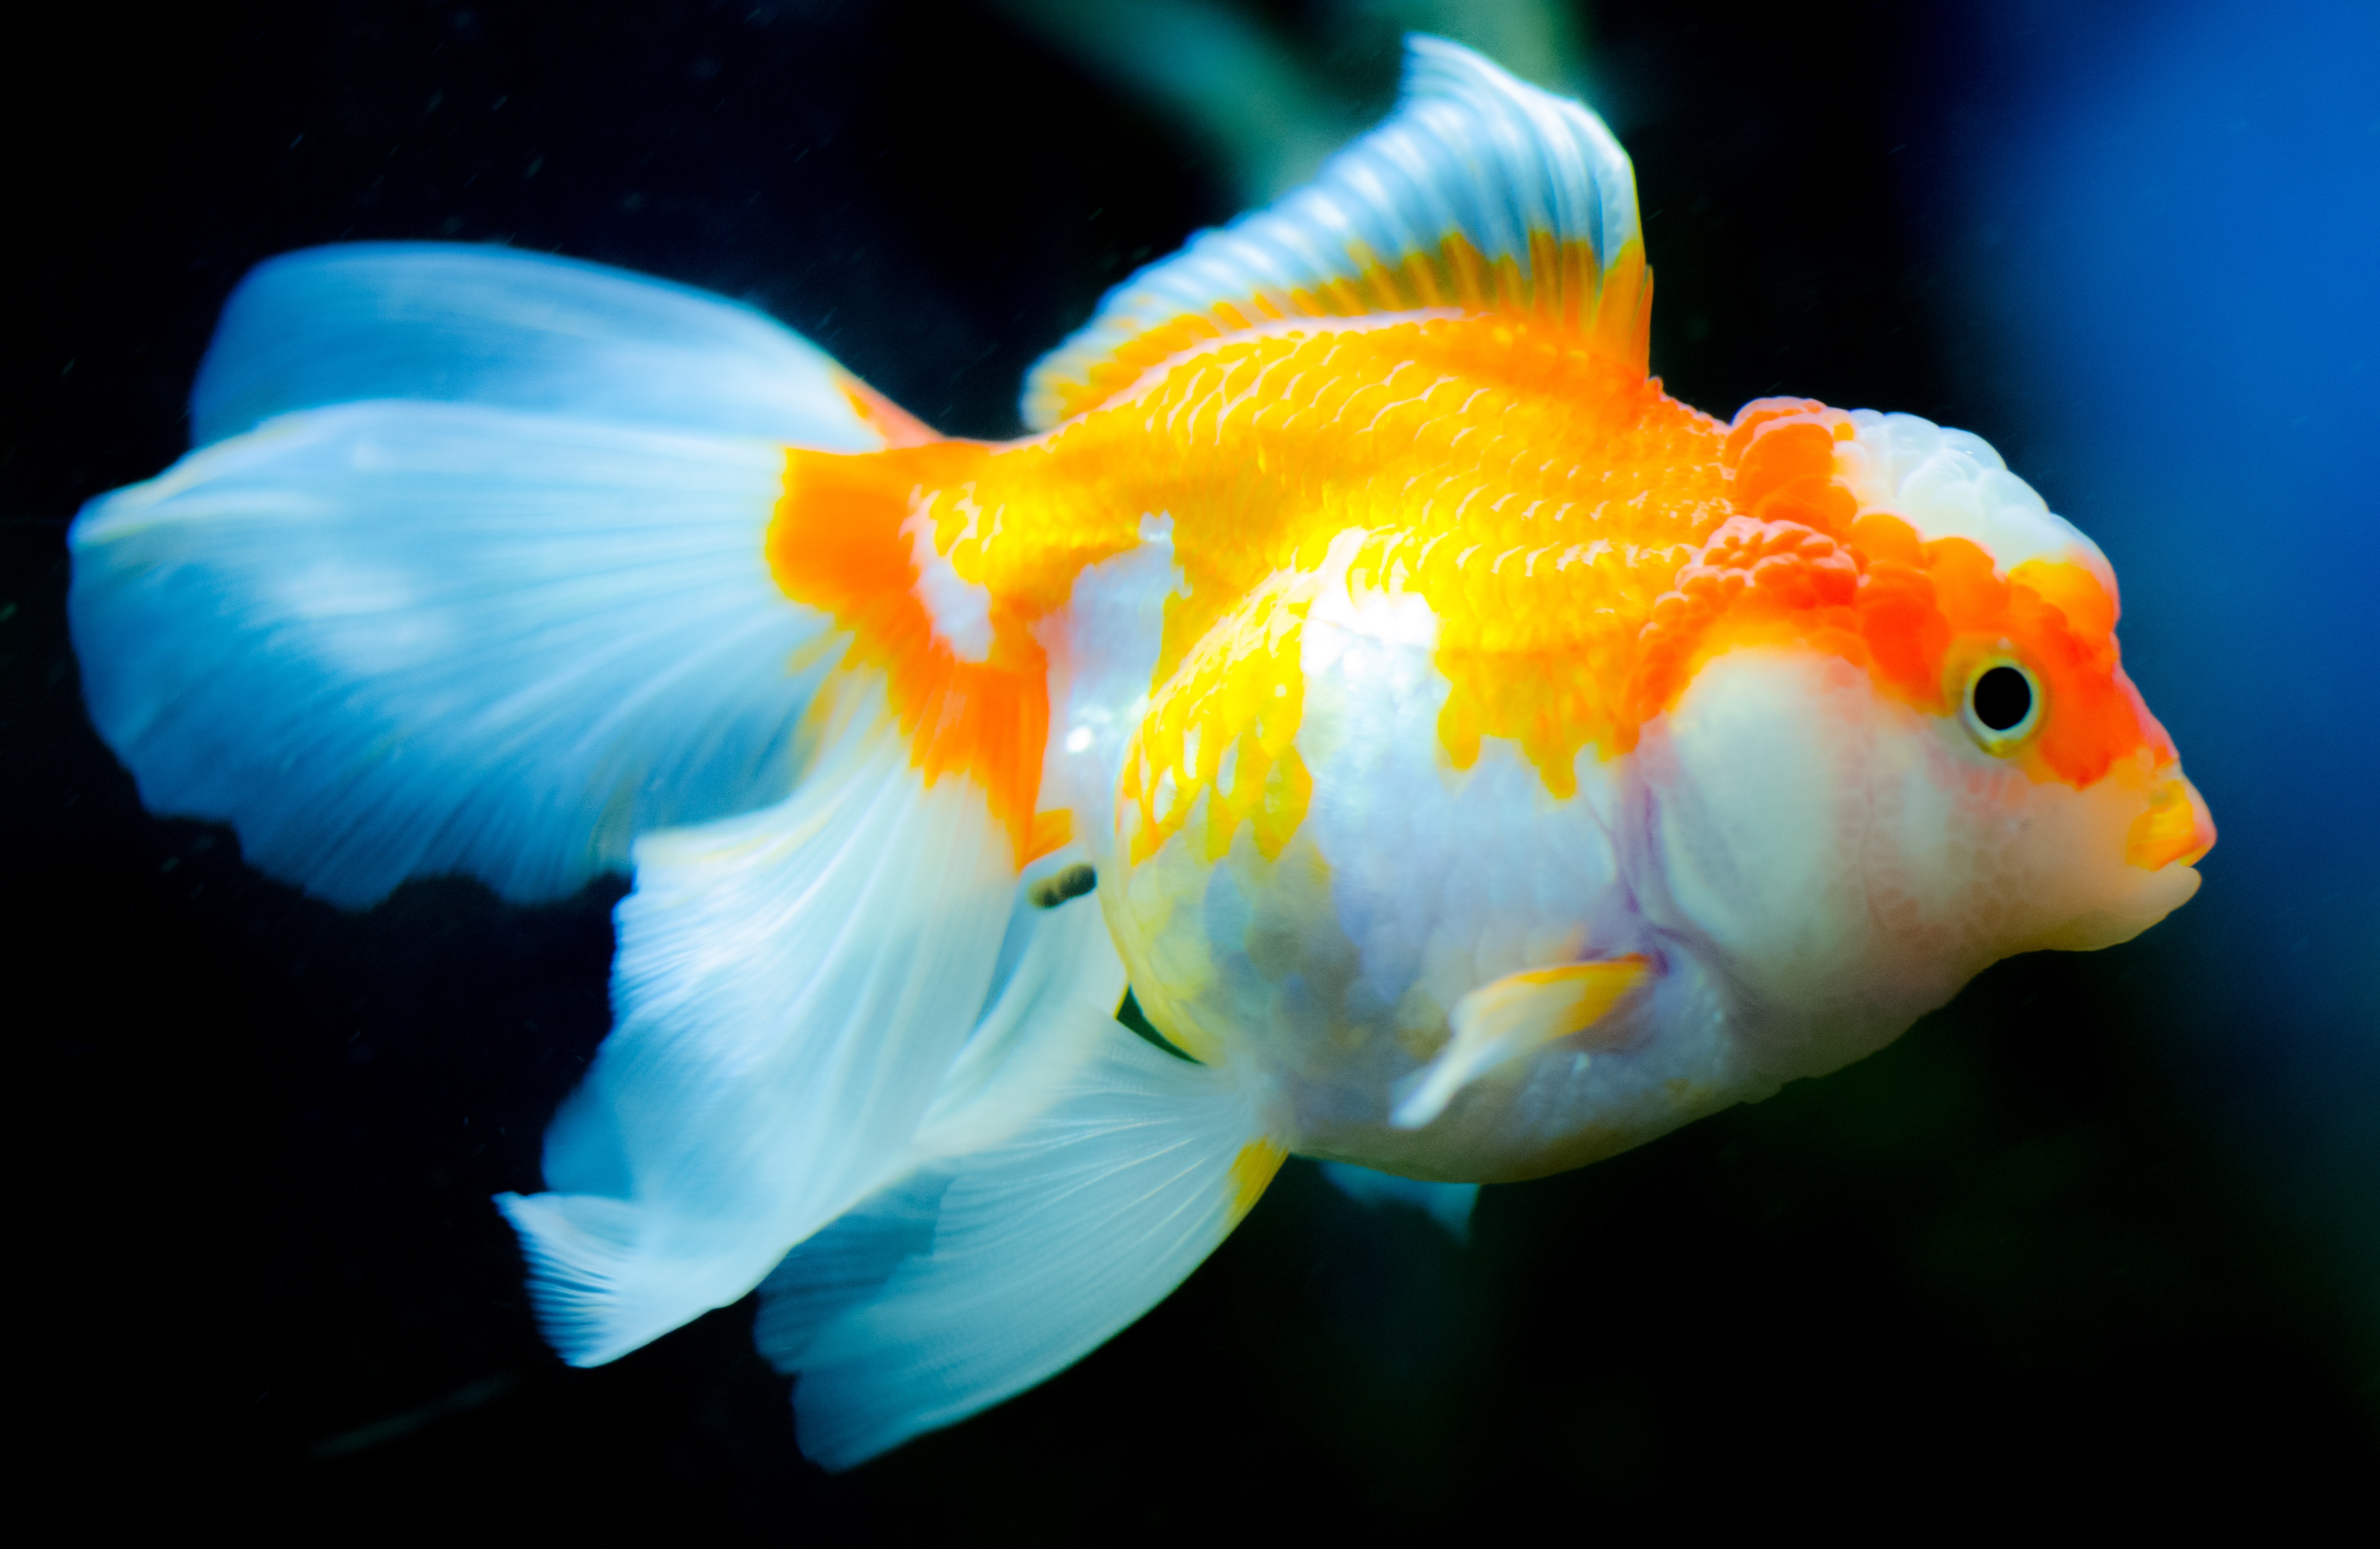 257 Amazing Fish Photos · Pexels · Free Stock Photos